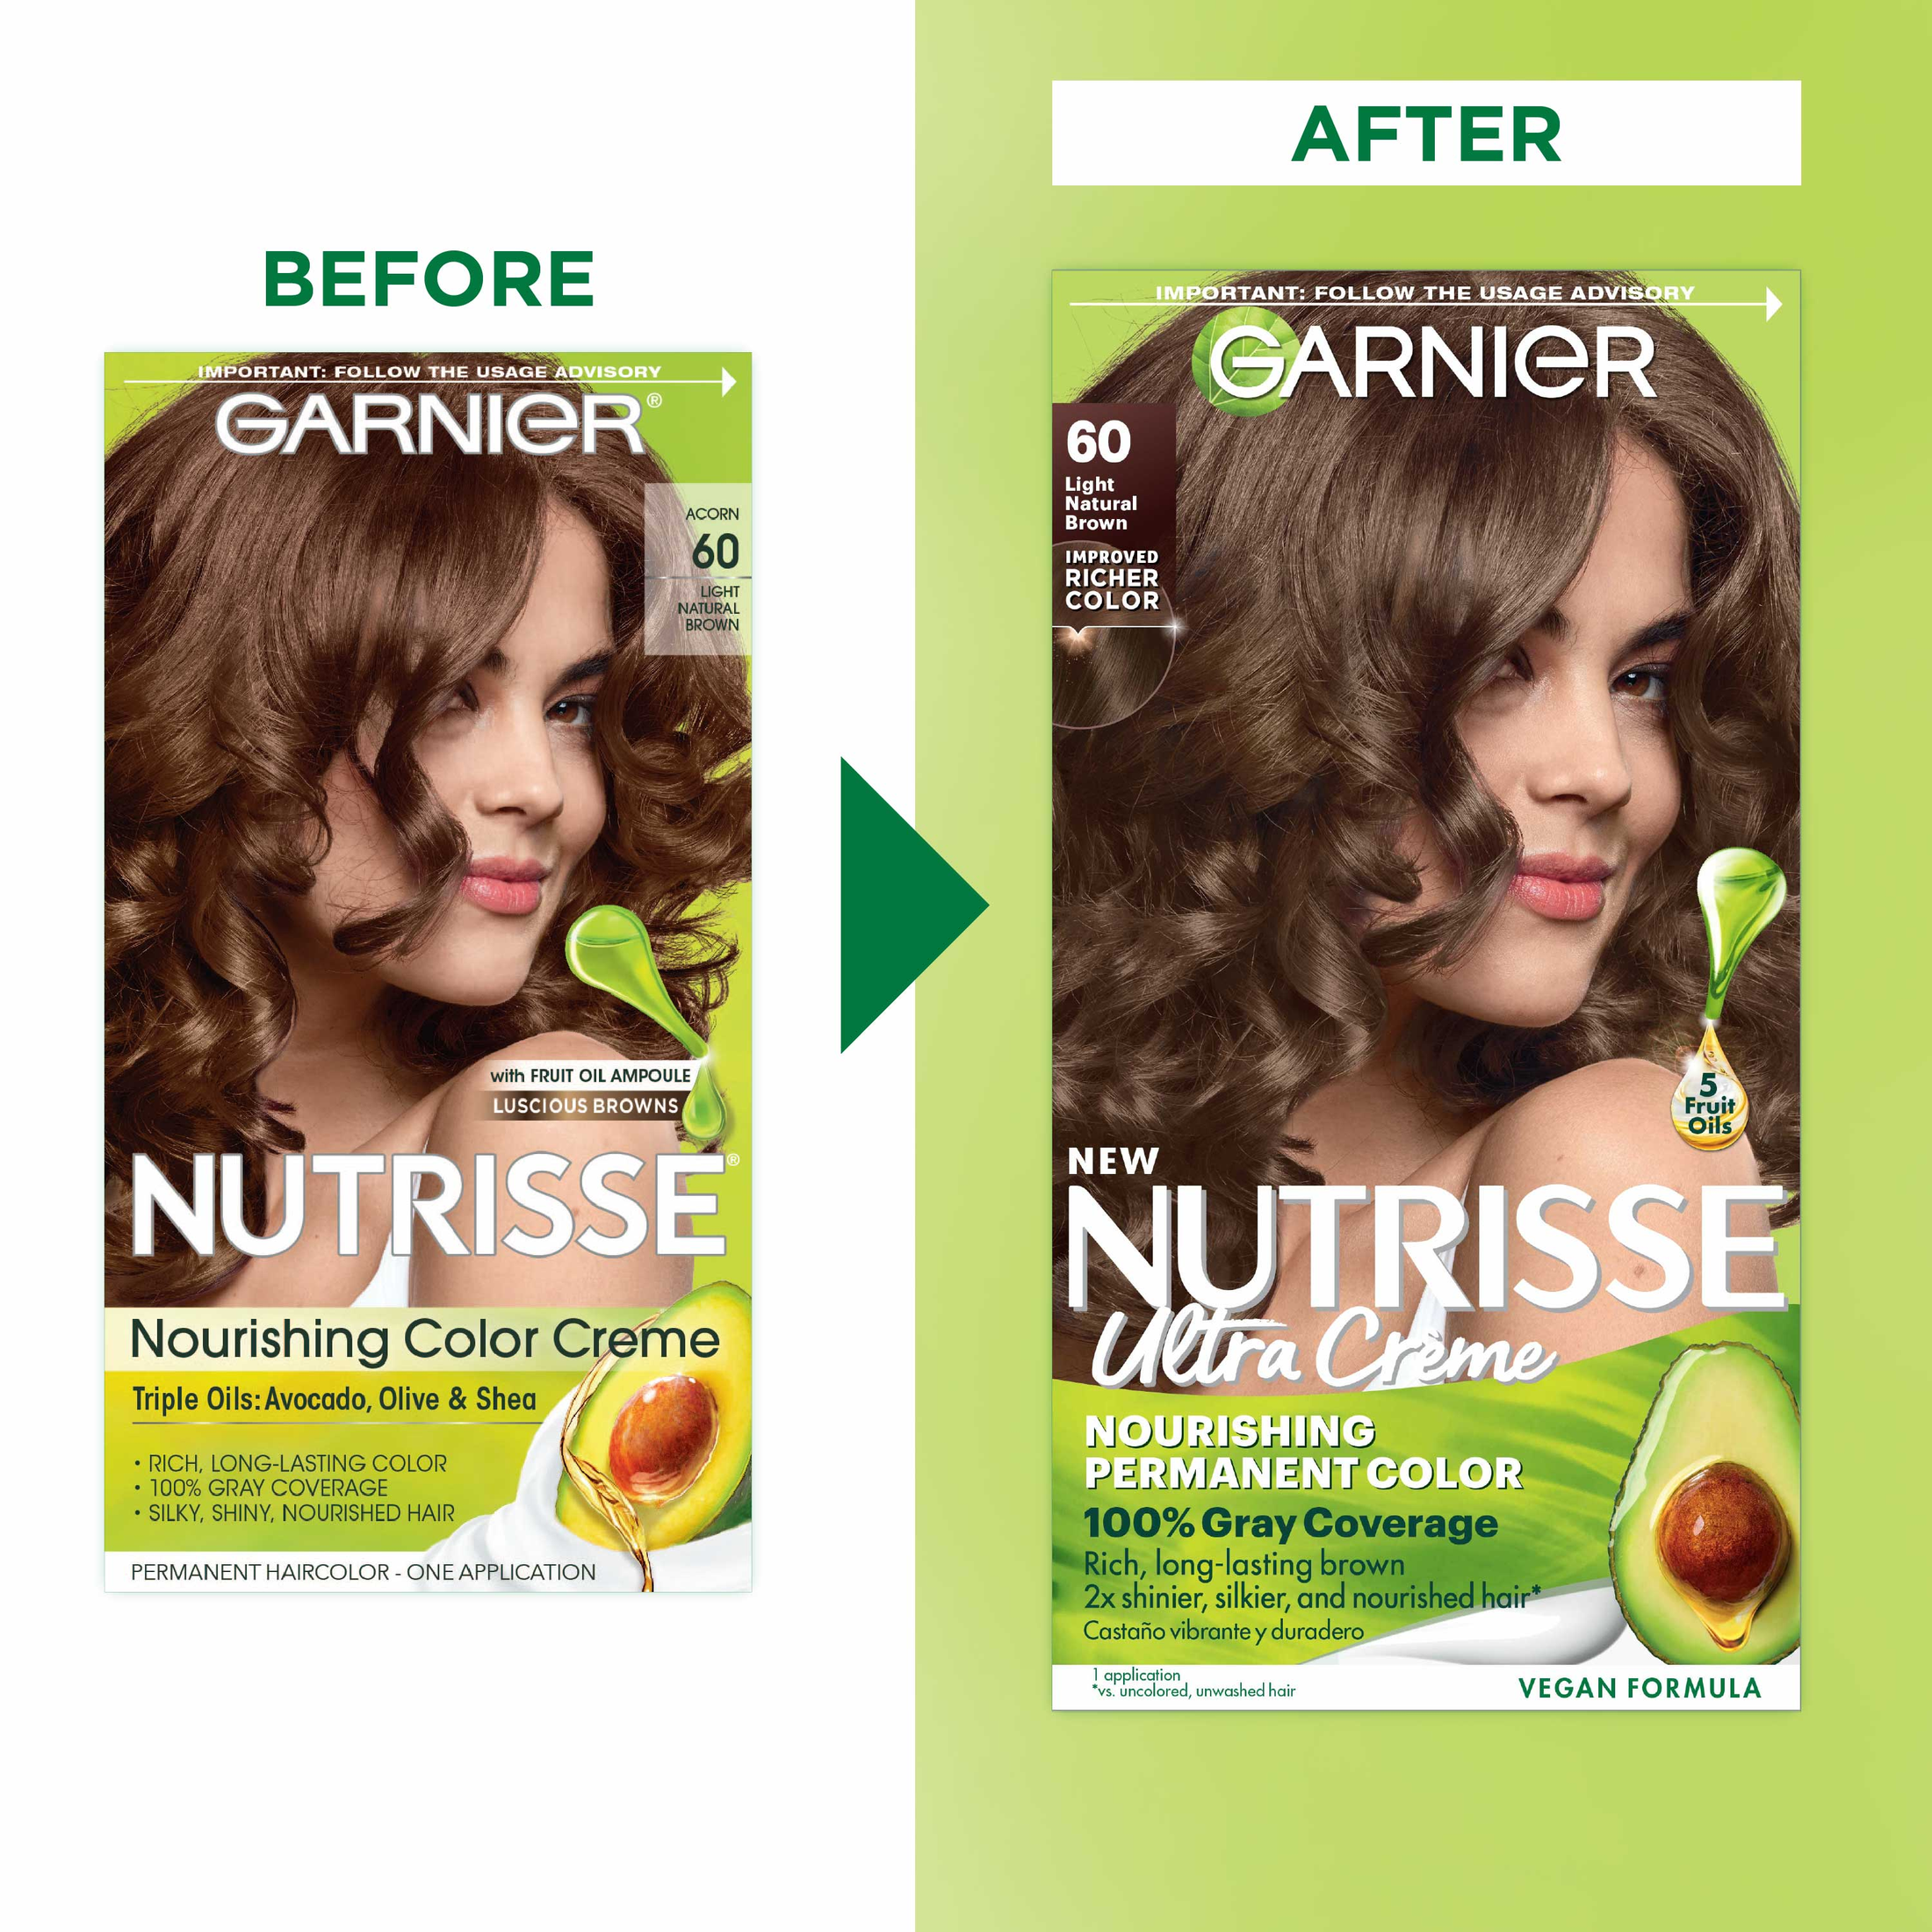 Garnier Nutrisse Nourishing Hair Color Creme, 060 Light Natural Brown Acorn - image 3 of 11